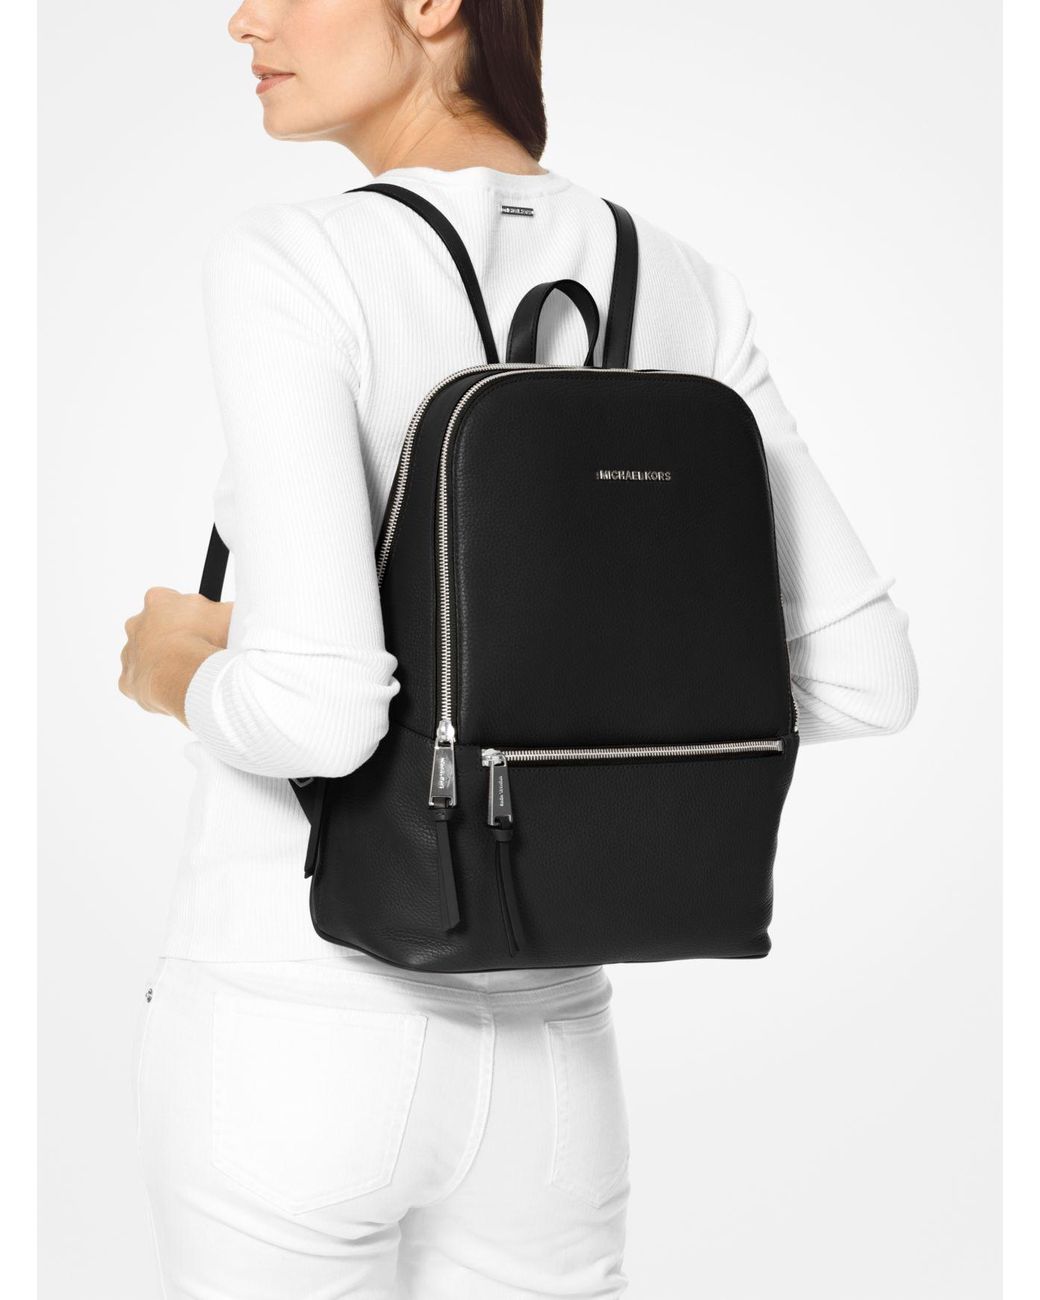 Michael Kors Toby Medium Pebbled Leather Backpack in Black | Lyst